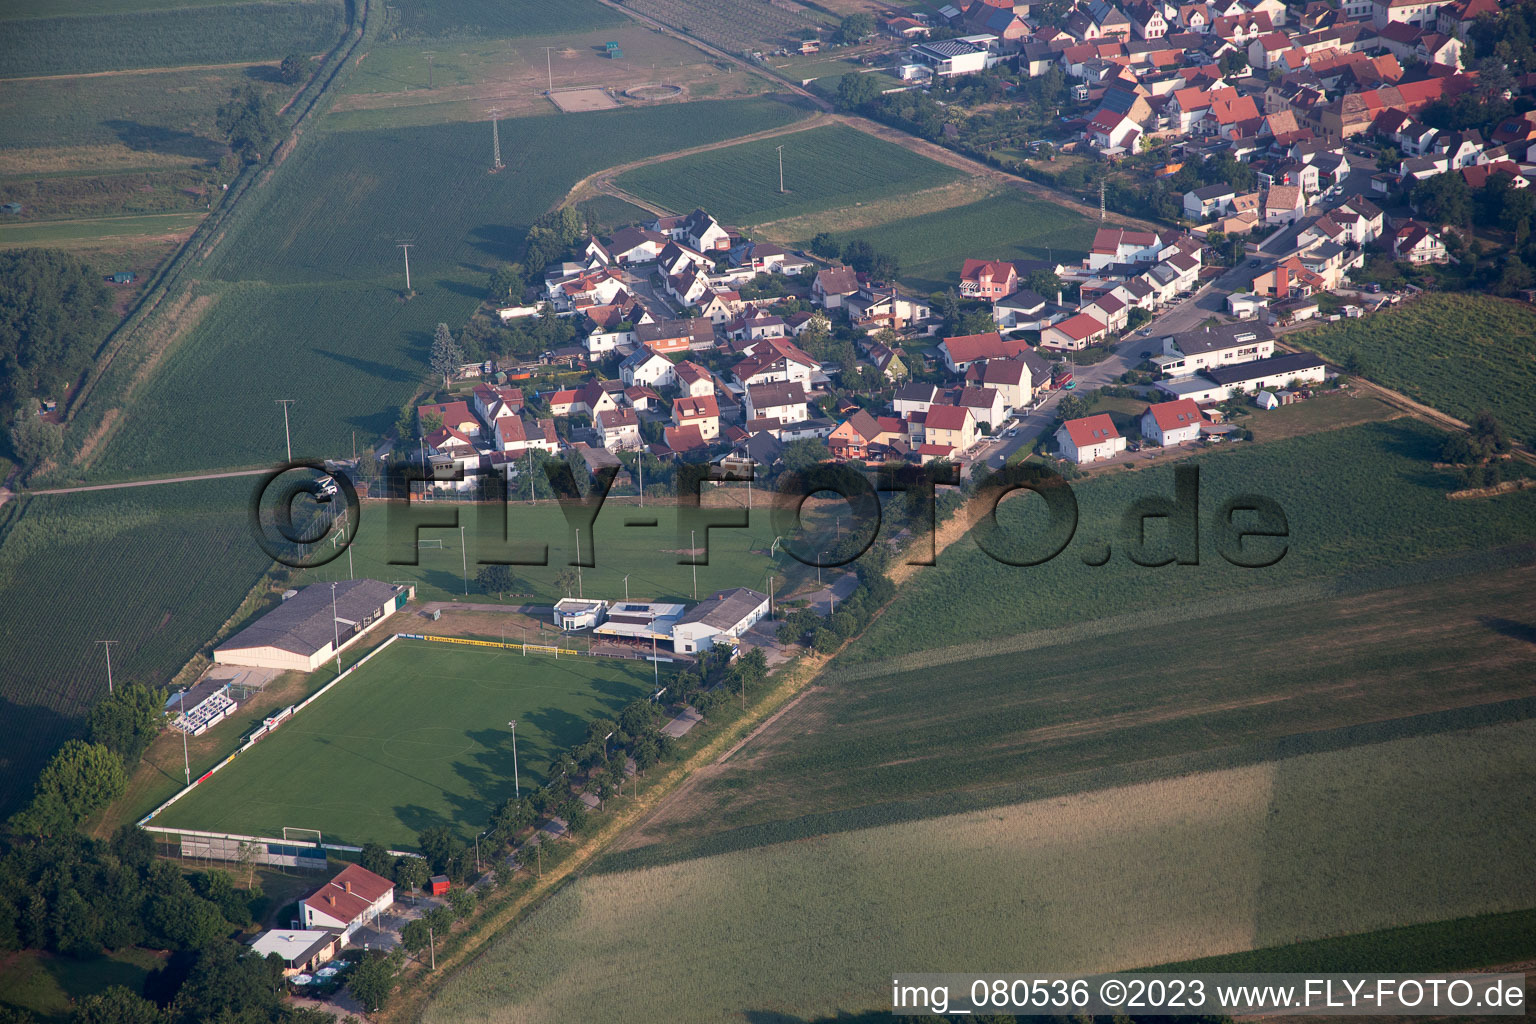 Sports field TuS 1914 eV in the district Mechtersheim in Römerberg in the state Rhineland-Palatinate, Germany